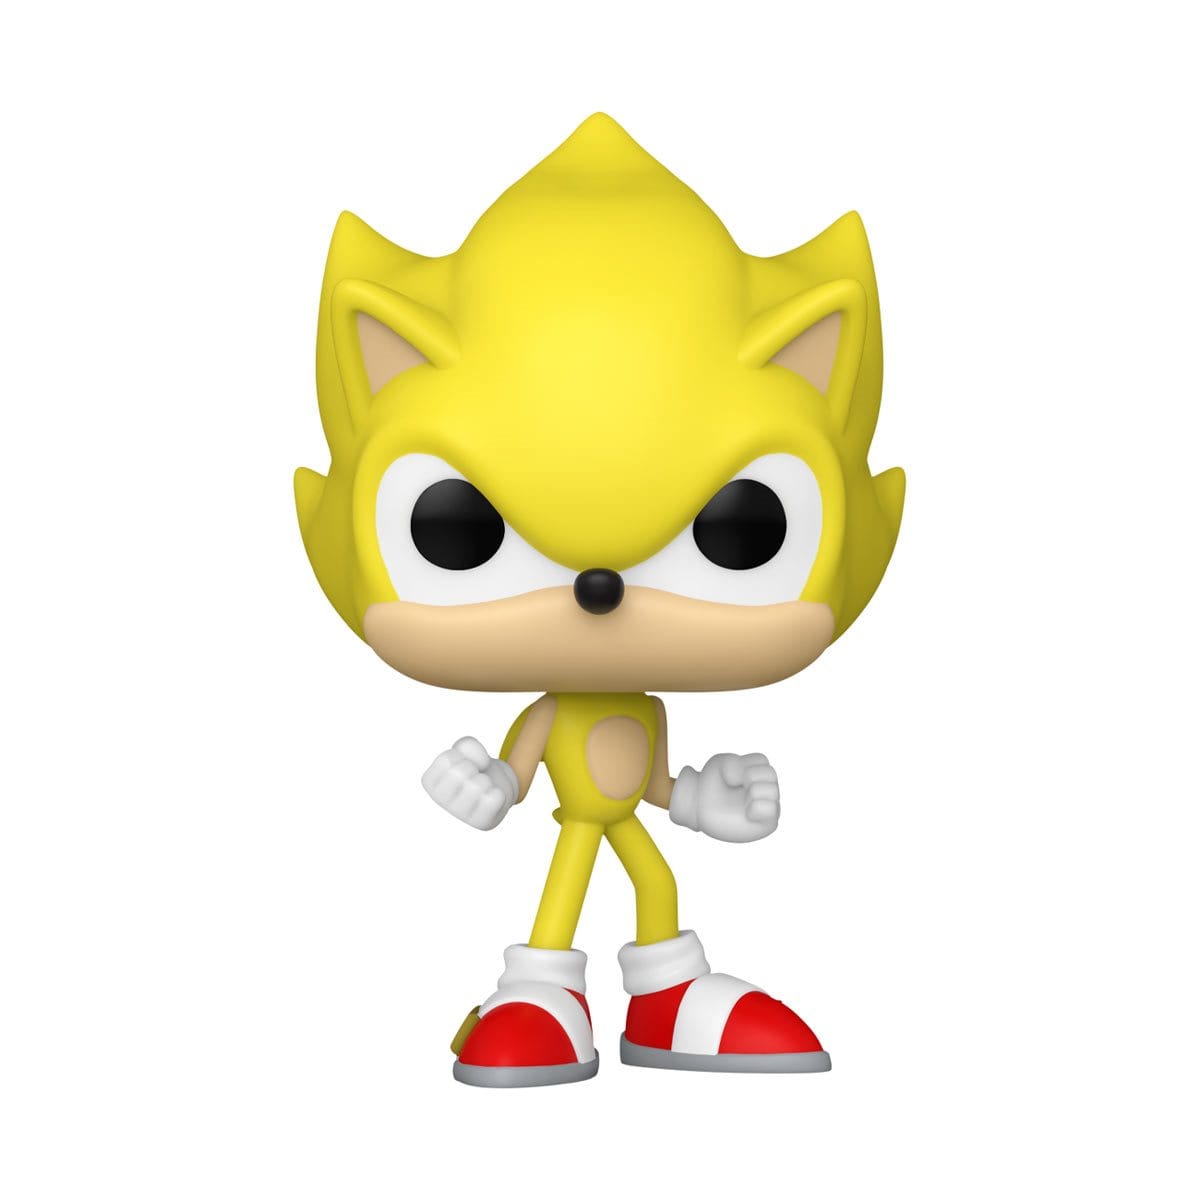 Funko Pop! Sonic the Hedgehog Super Sonic  Vinyl Figure 923 - AAA Anime Exclusive